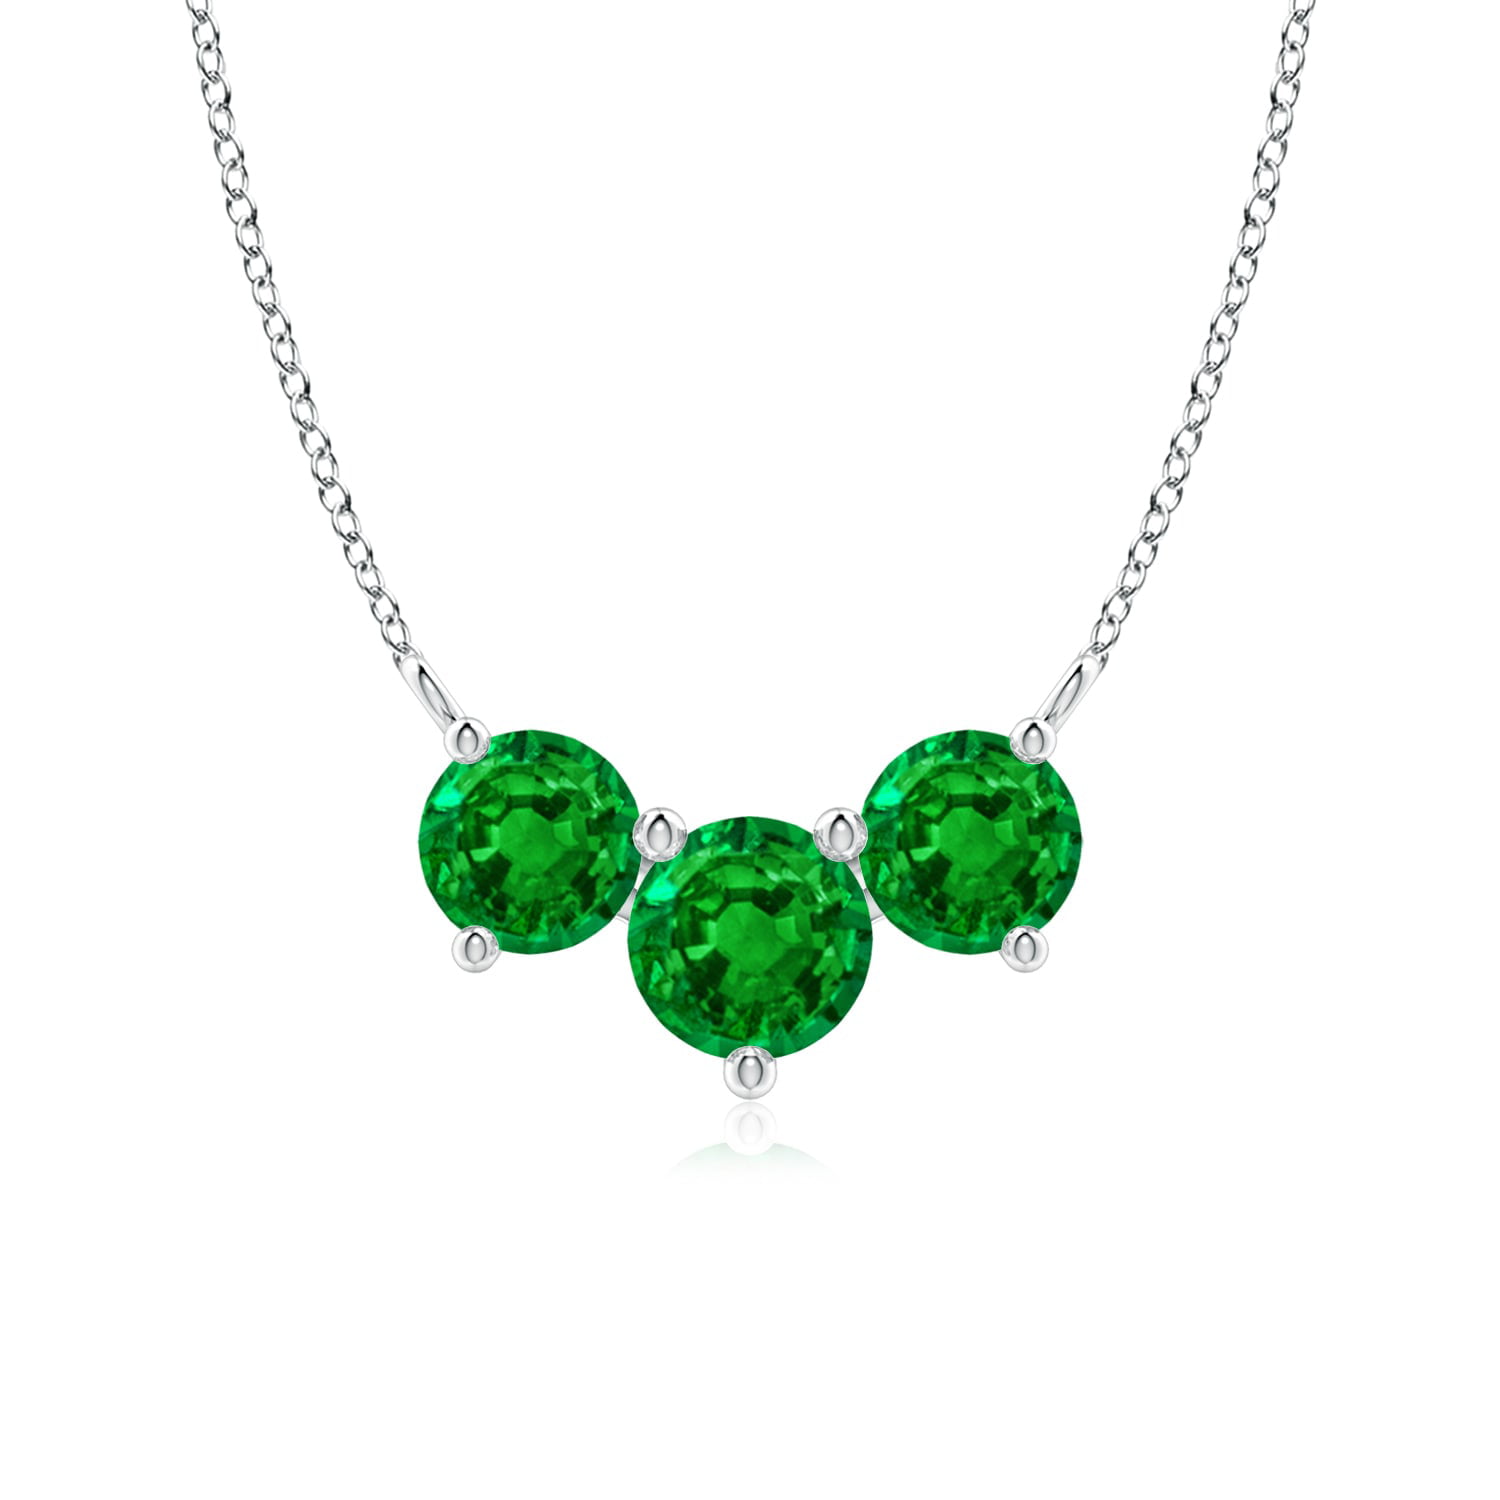 18k Gold Plated Three Stone Emerald Gemstone Pendant Necklace Set Birthstone Gemstone Natural Gemstone 6mm Prong Set Pendant Necklace